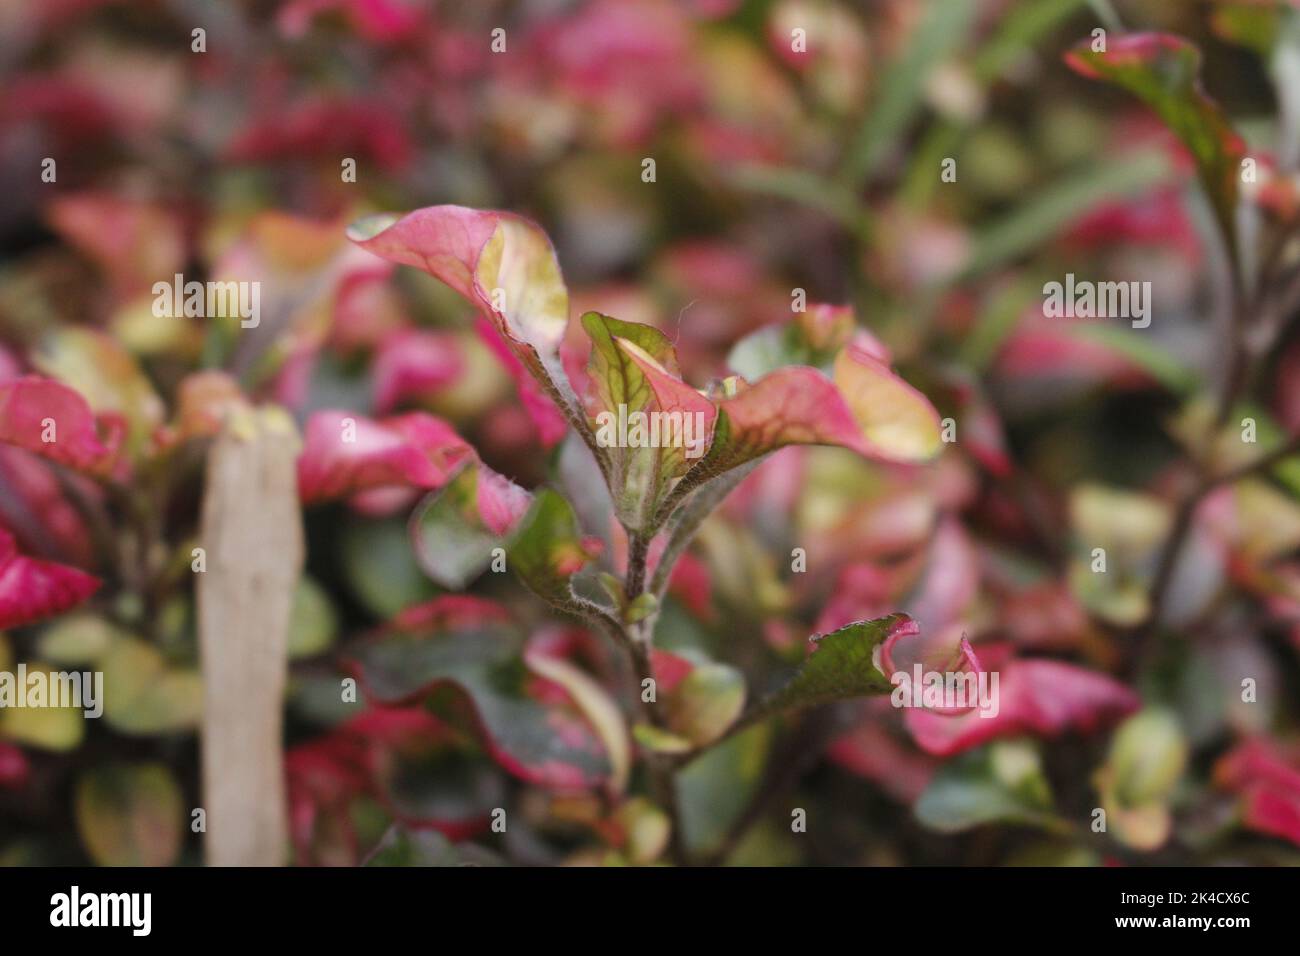 A closeup of Joseph's coat plants (Alternanthera) growing outdoors Stock Photo